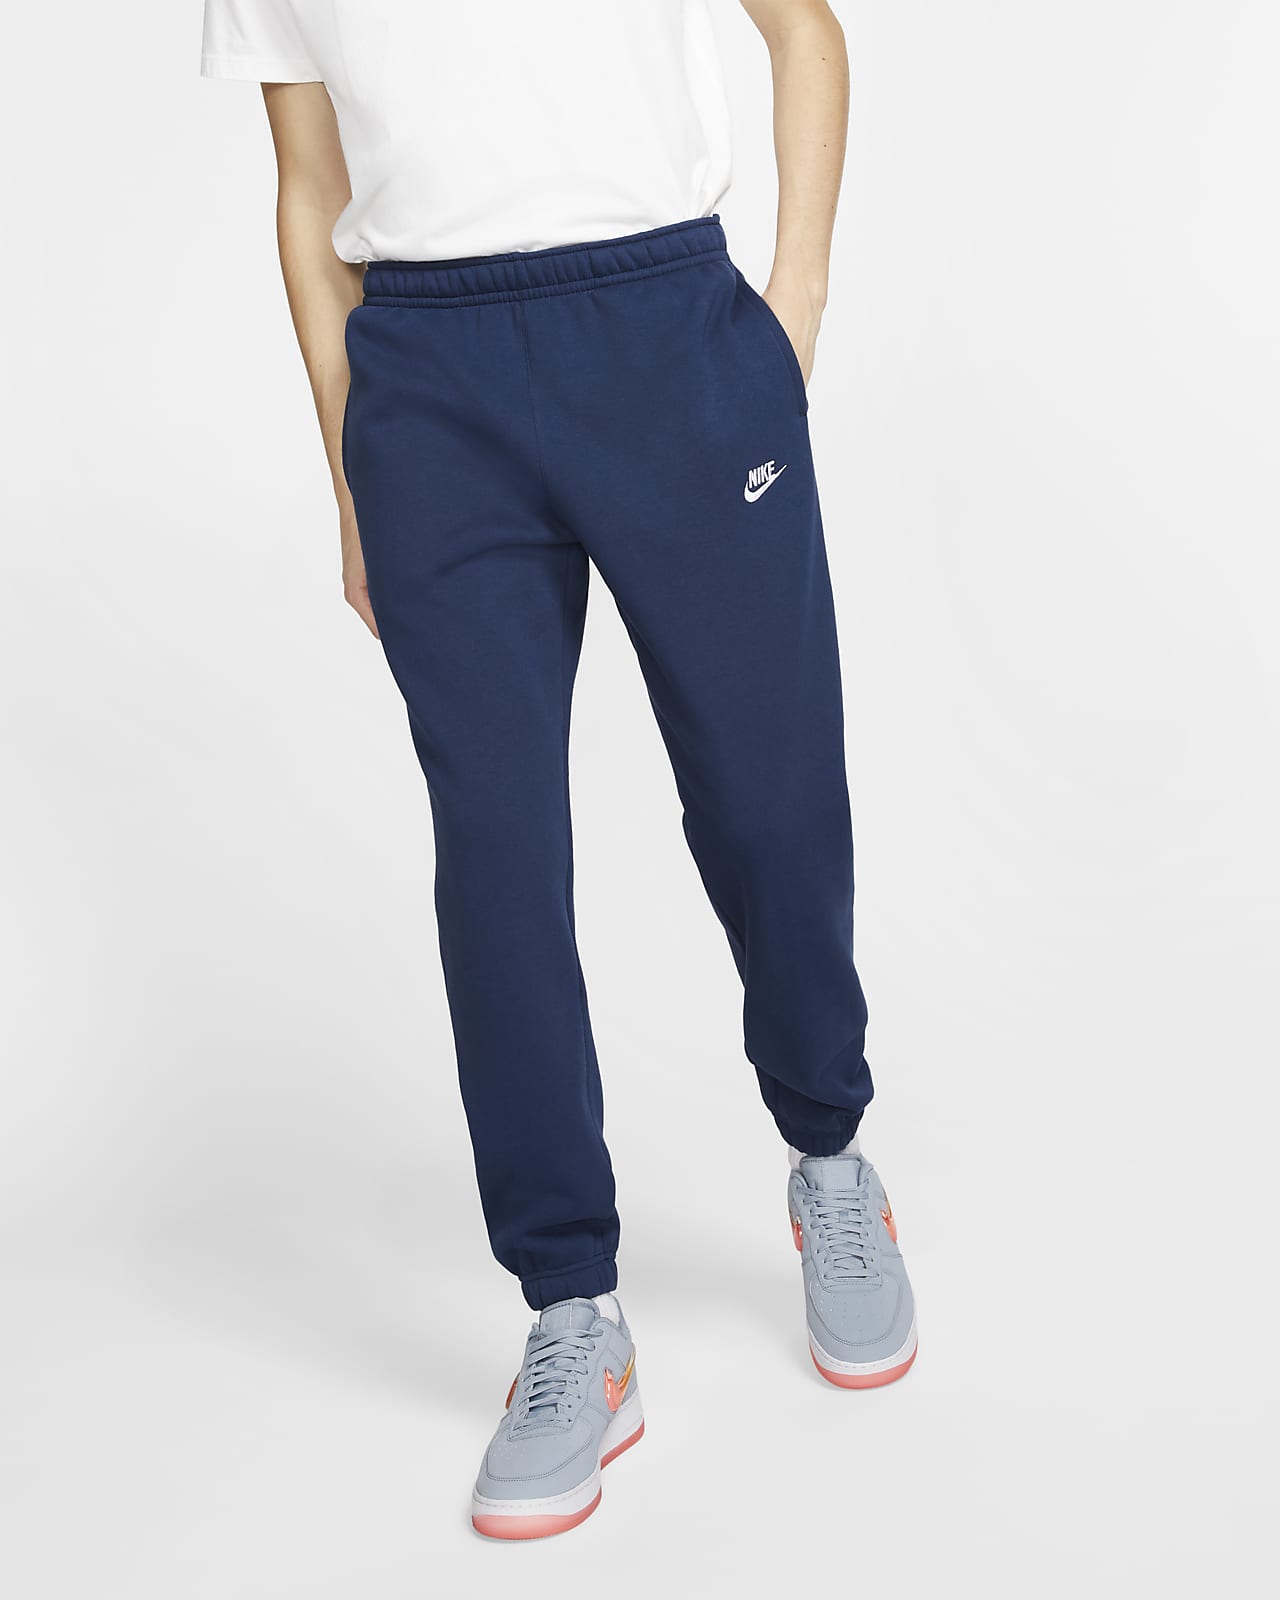 Nike Swoosh - Gris - Pantalón Running Hombre talla XL  Pantalones running, Pantalon  running hombre, Pantalones nike